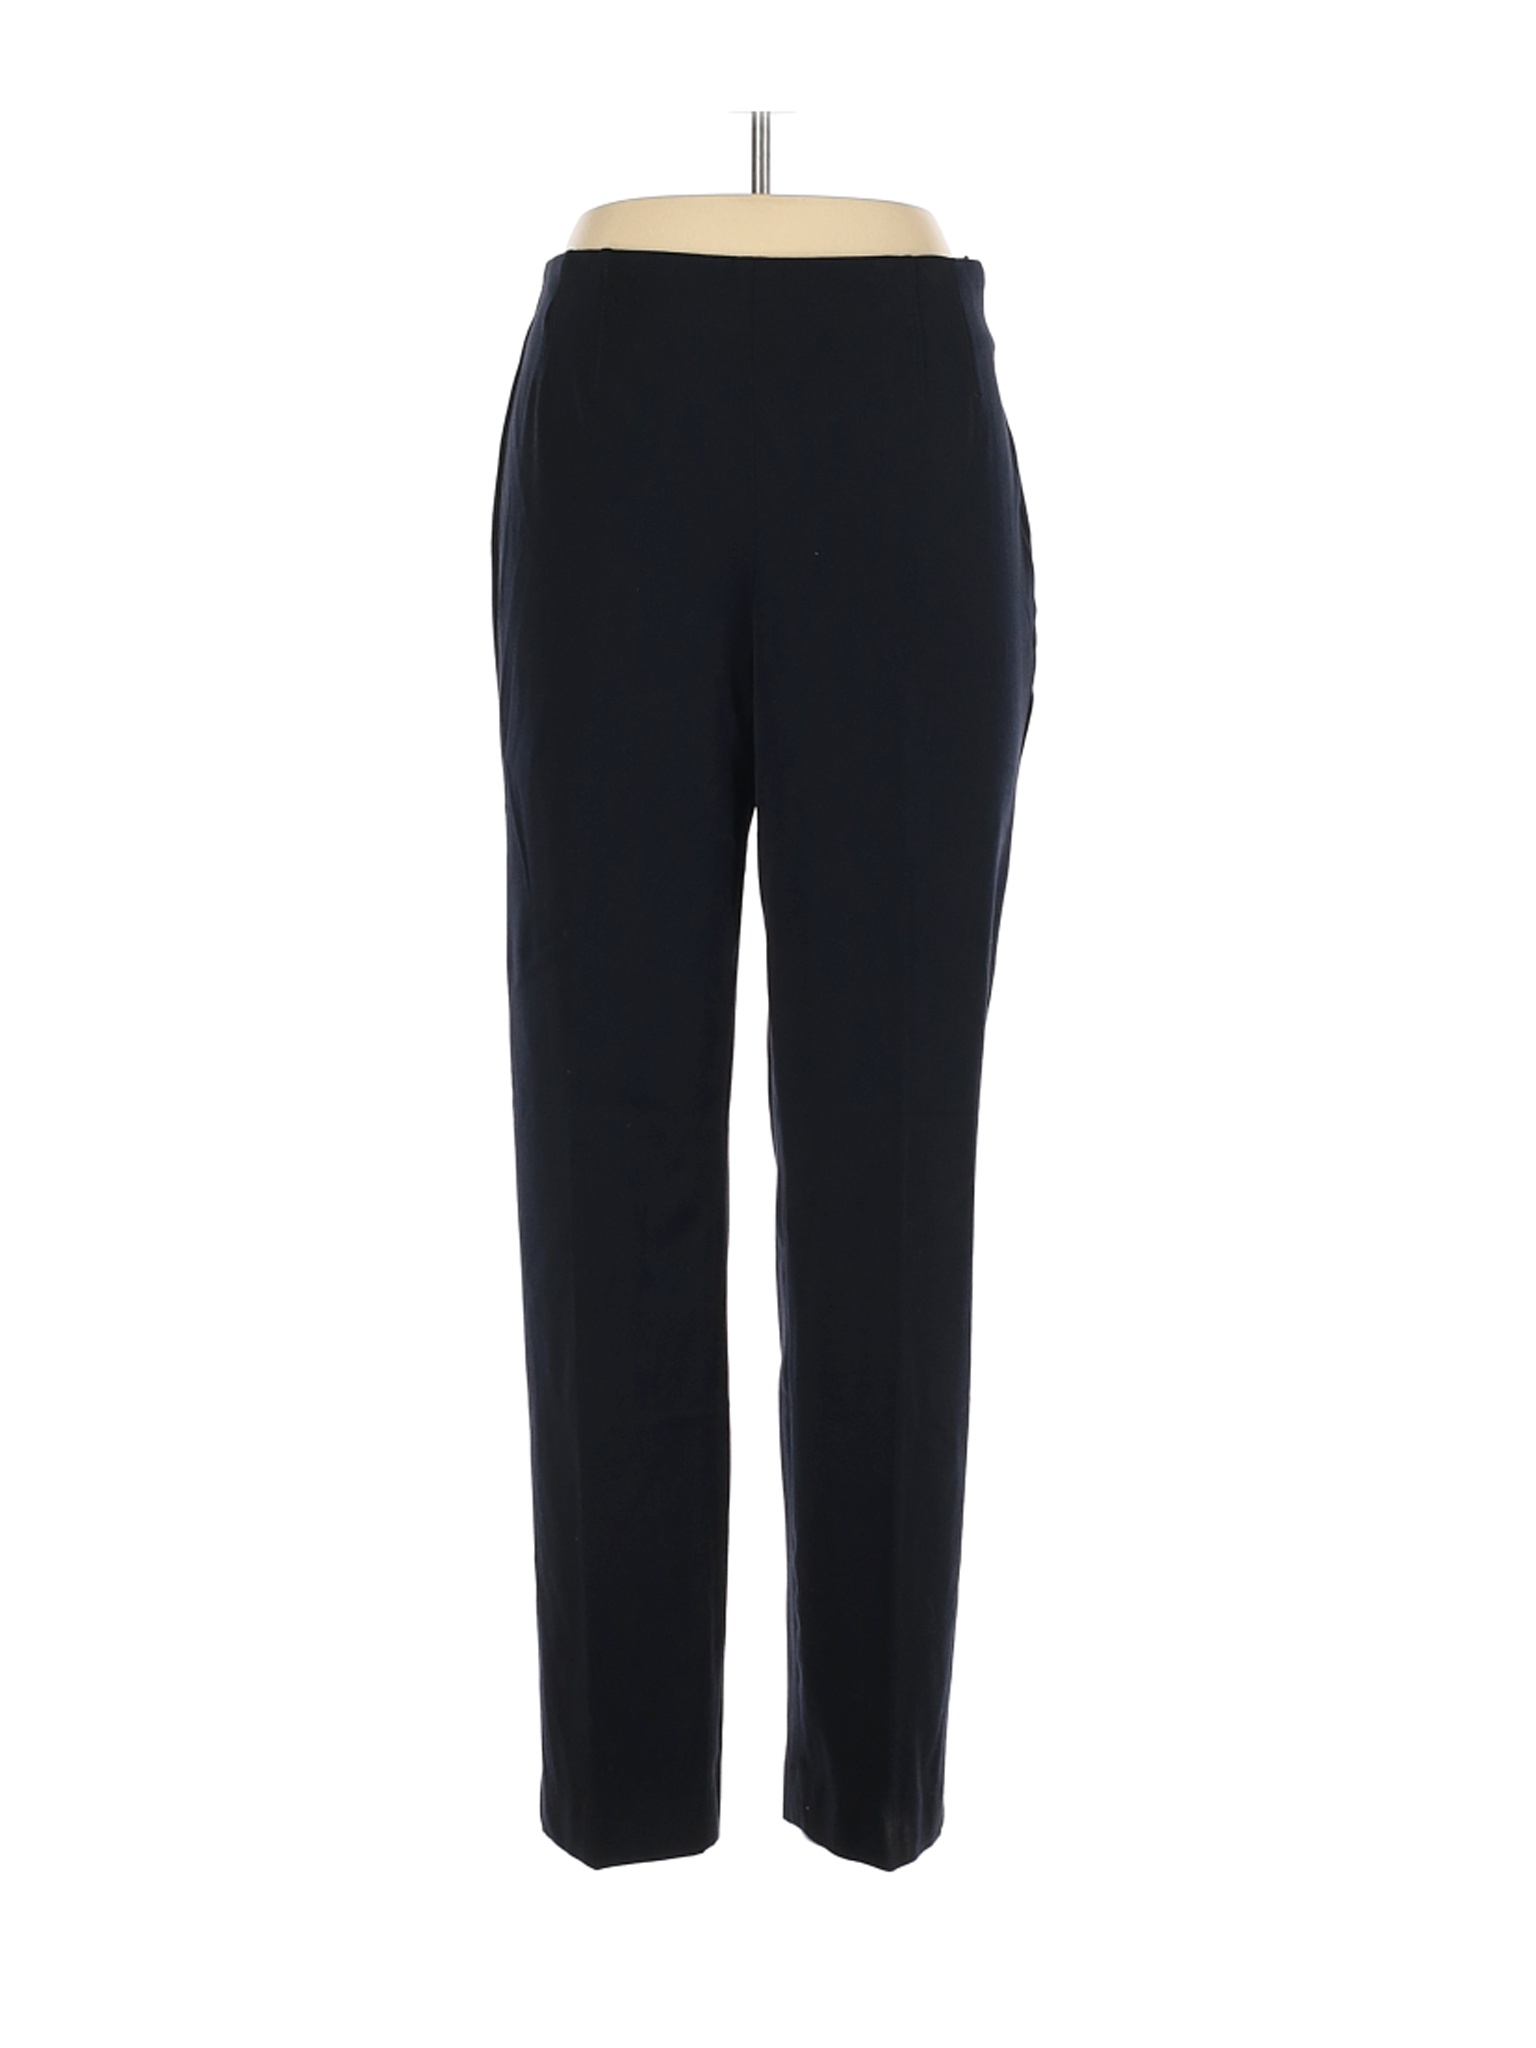 Talbots Women Black Casual Pants 12 | eBay